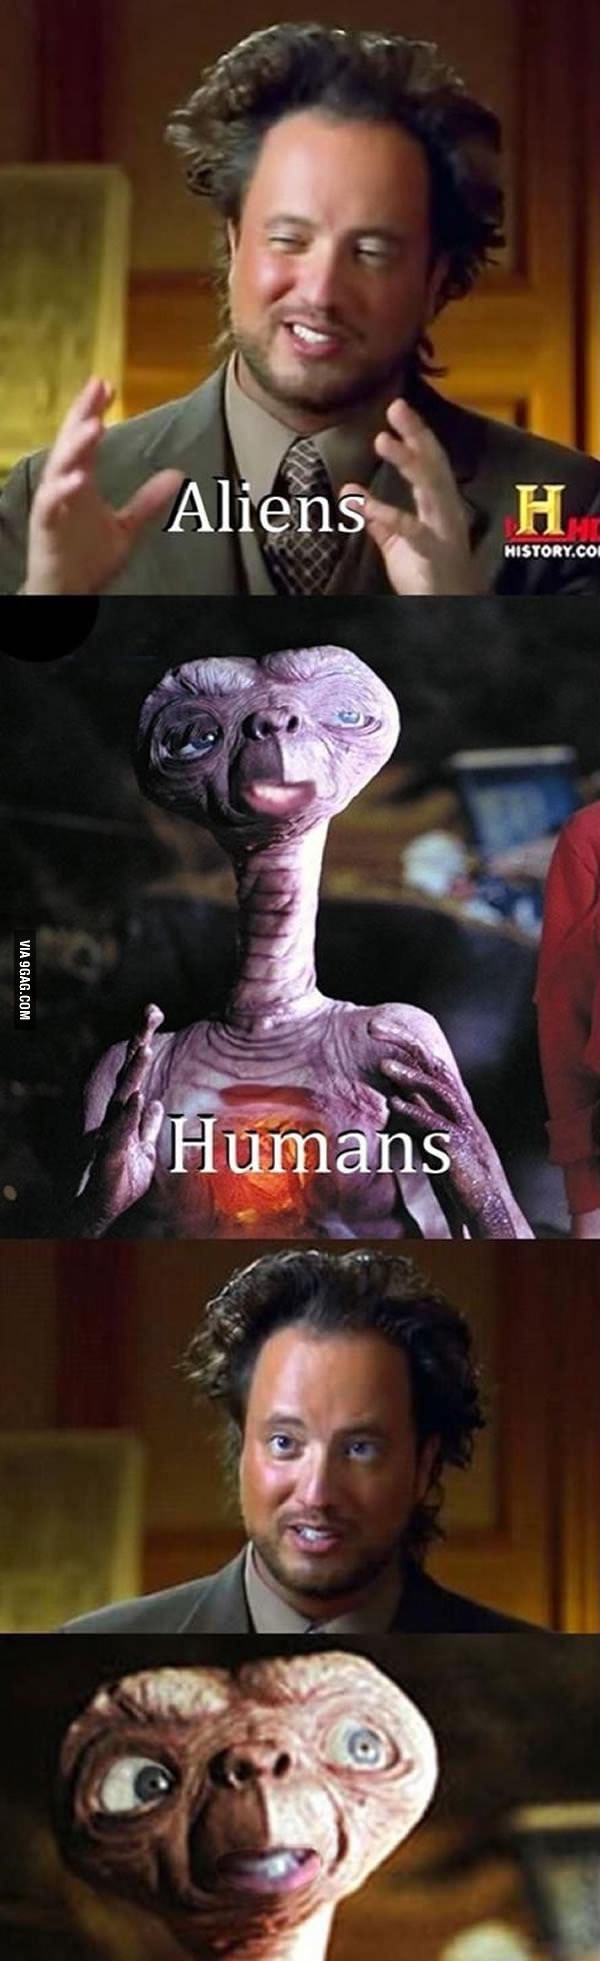 aliens guy meme facebook